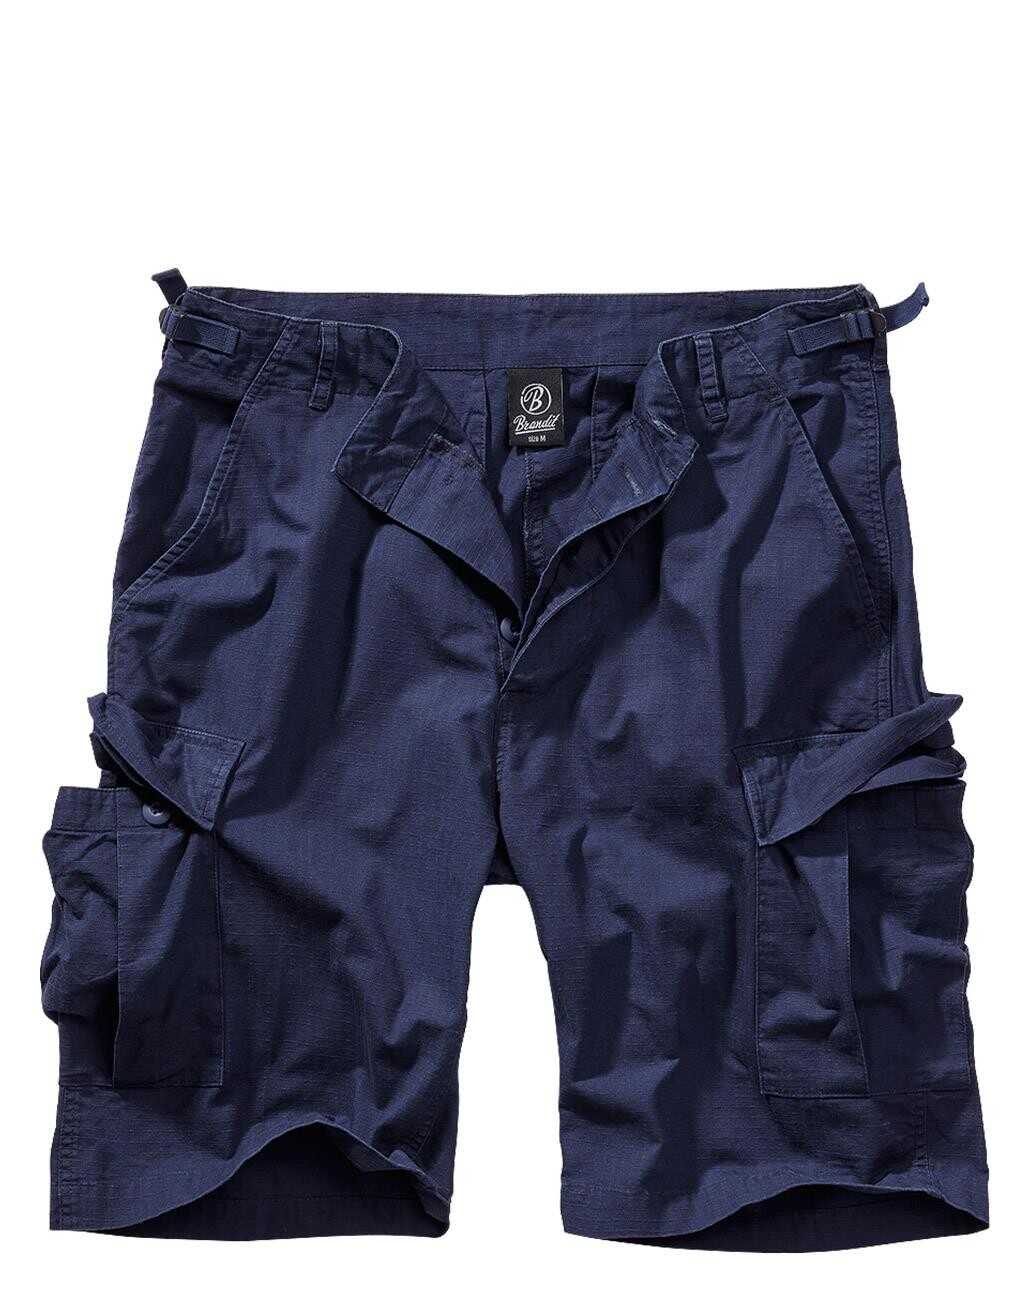 11: Brandit BDU Ripstop Shorts (Navy, S)